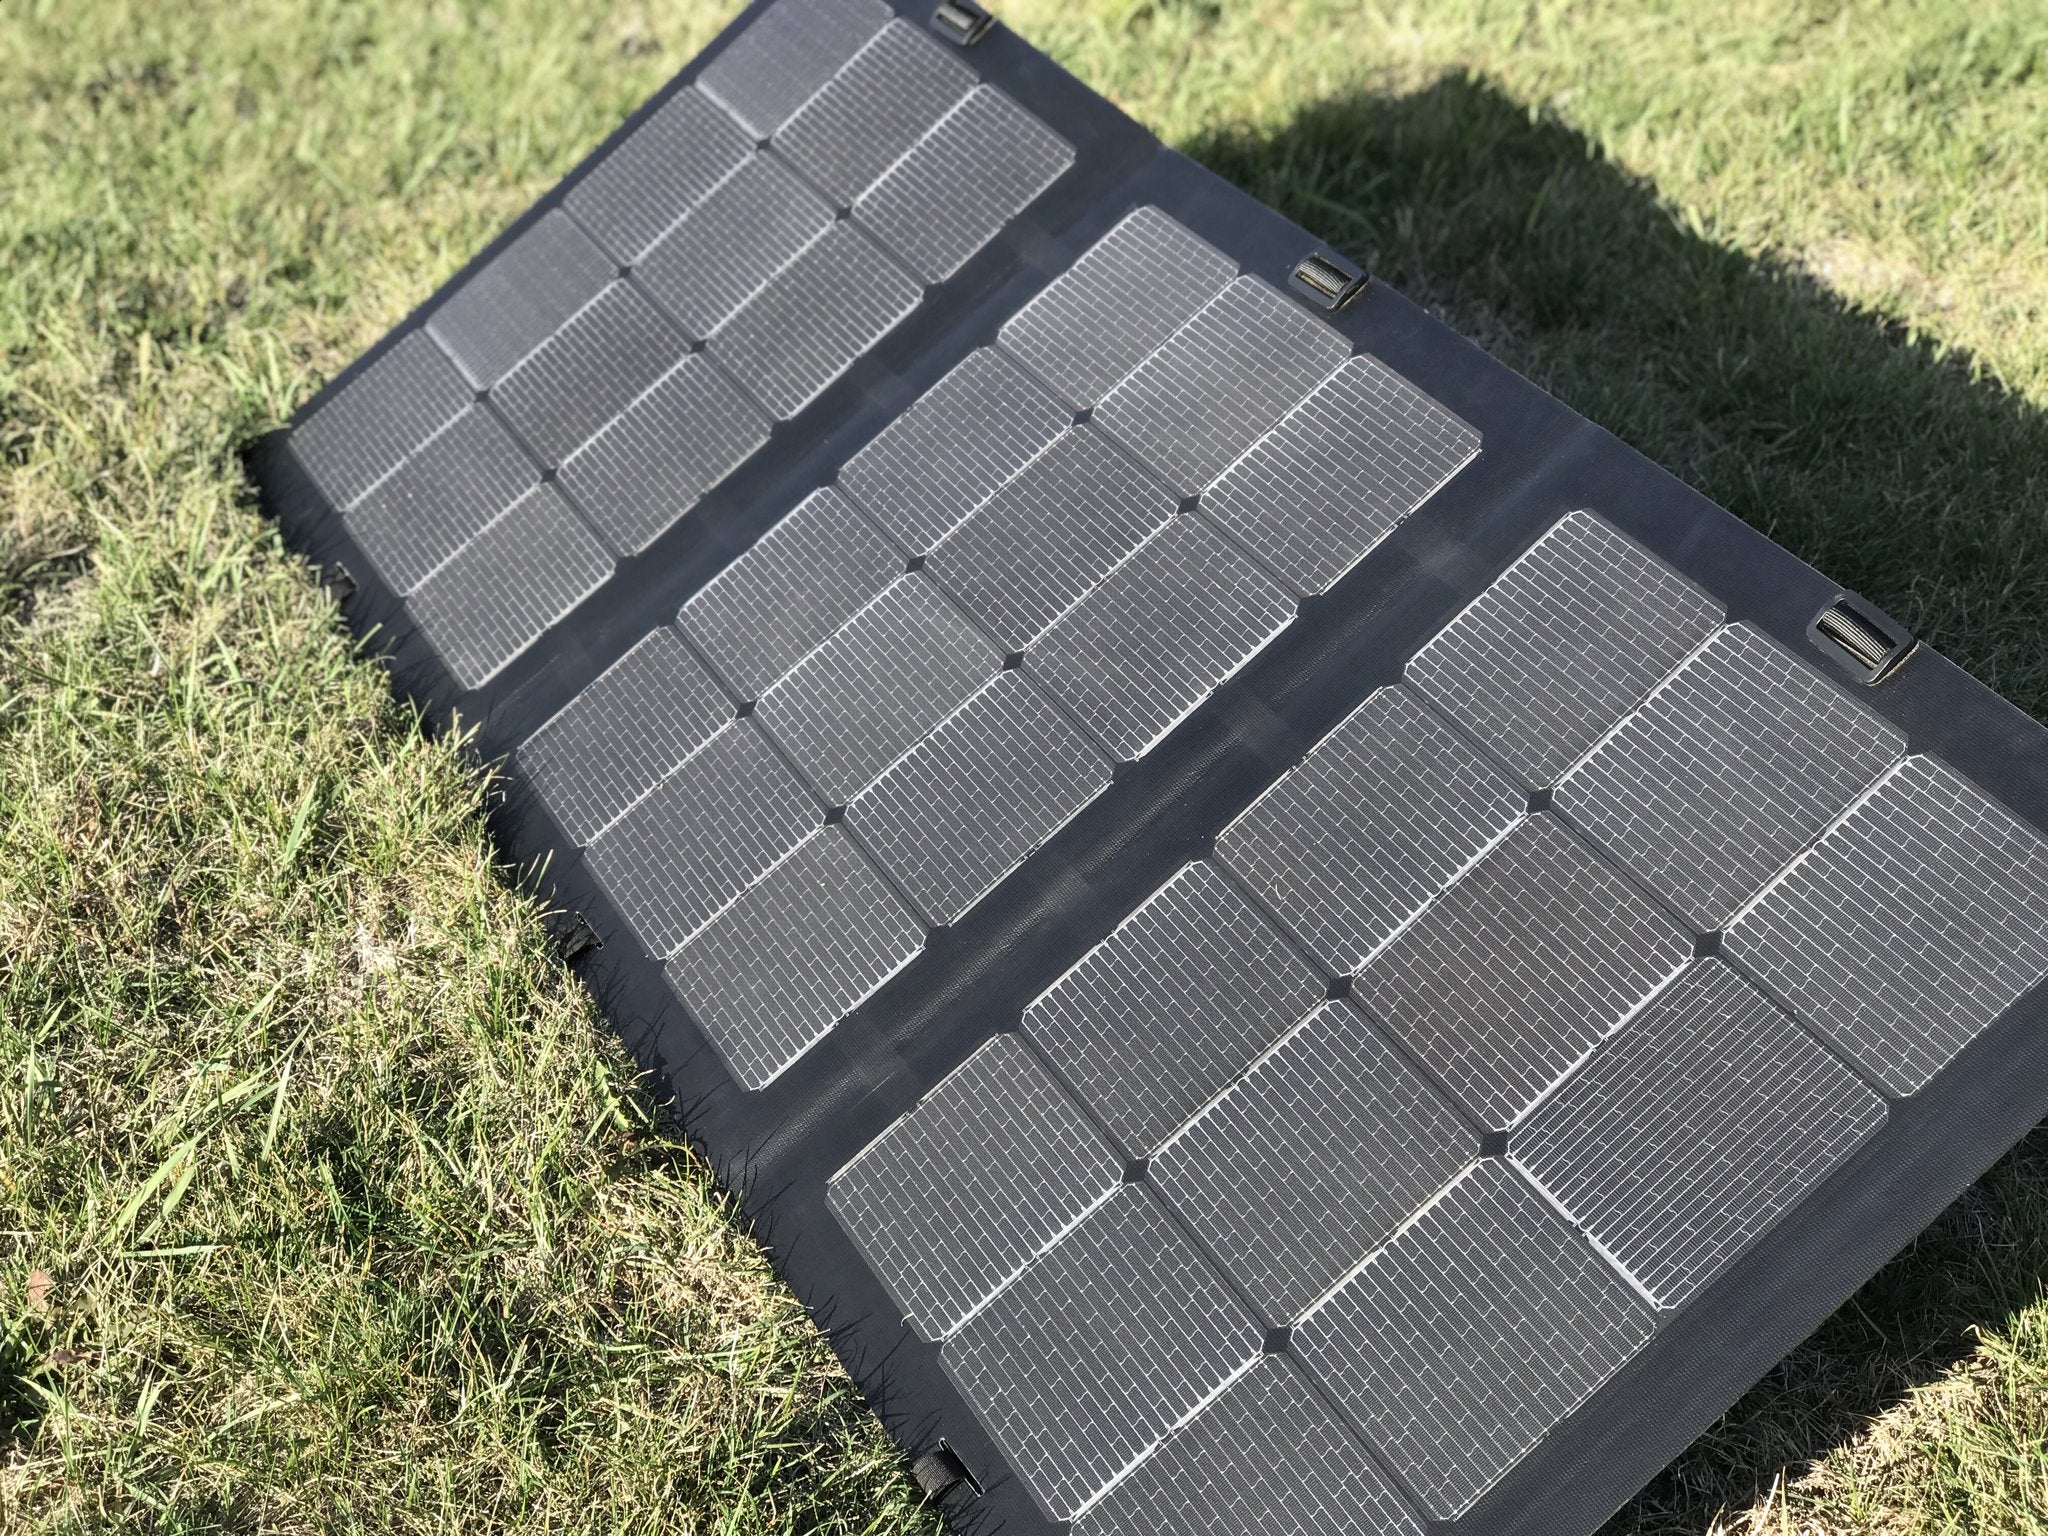 4thD 170 Watt Portable Solar Panel with Merlin Grid